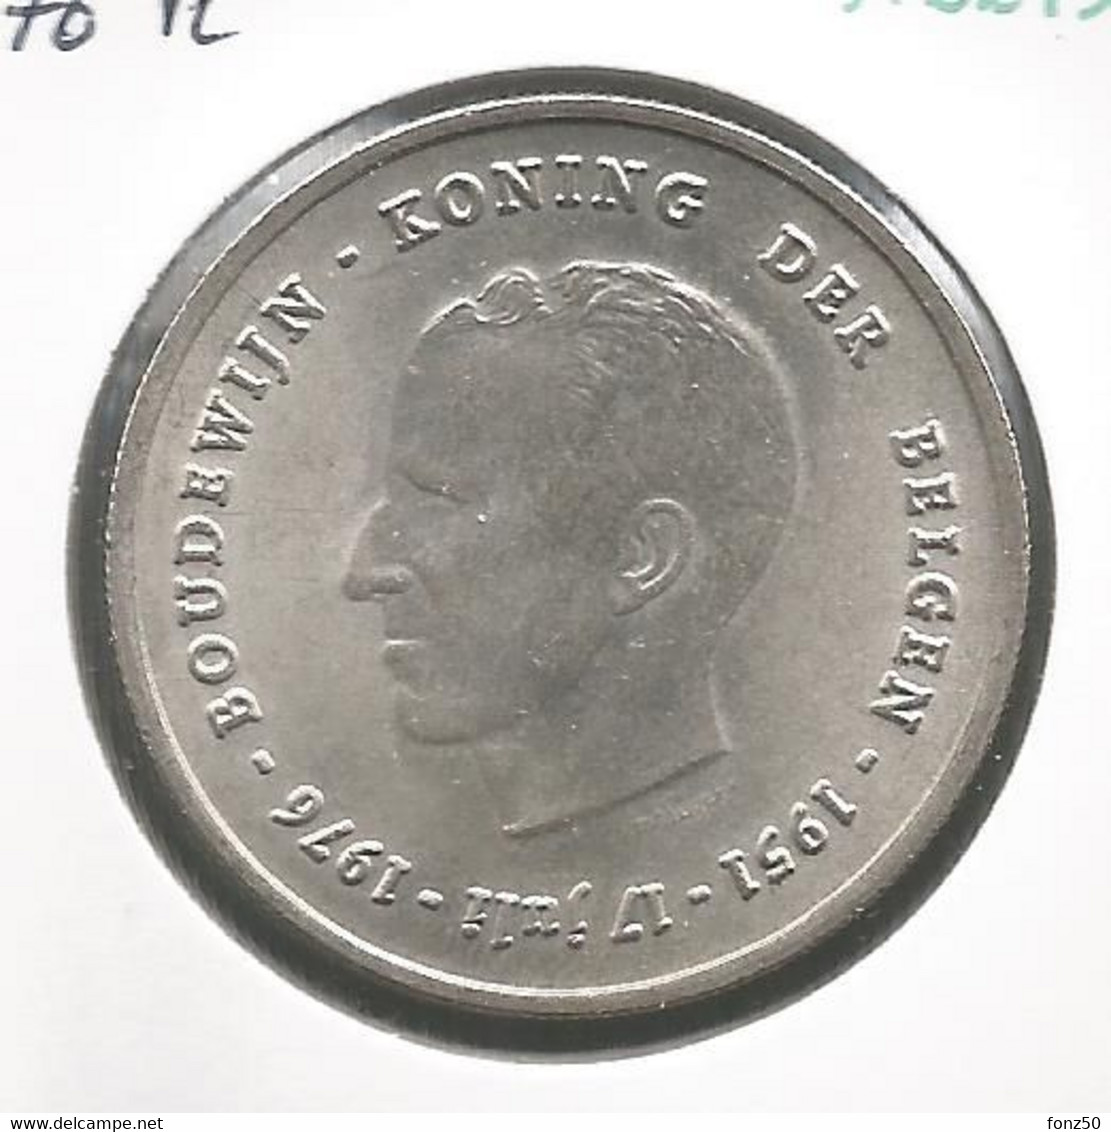 BOUDEWIJN * 250 Frank 1976 Vlaams * Nr 12243 - 250 Francs